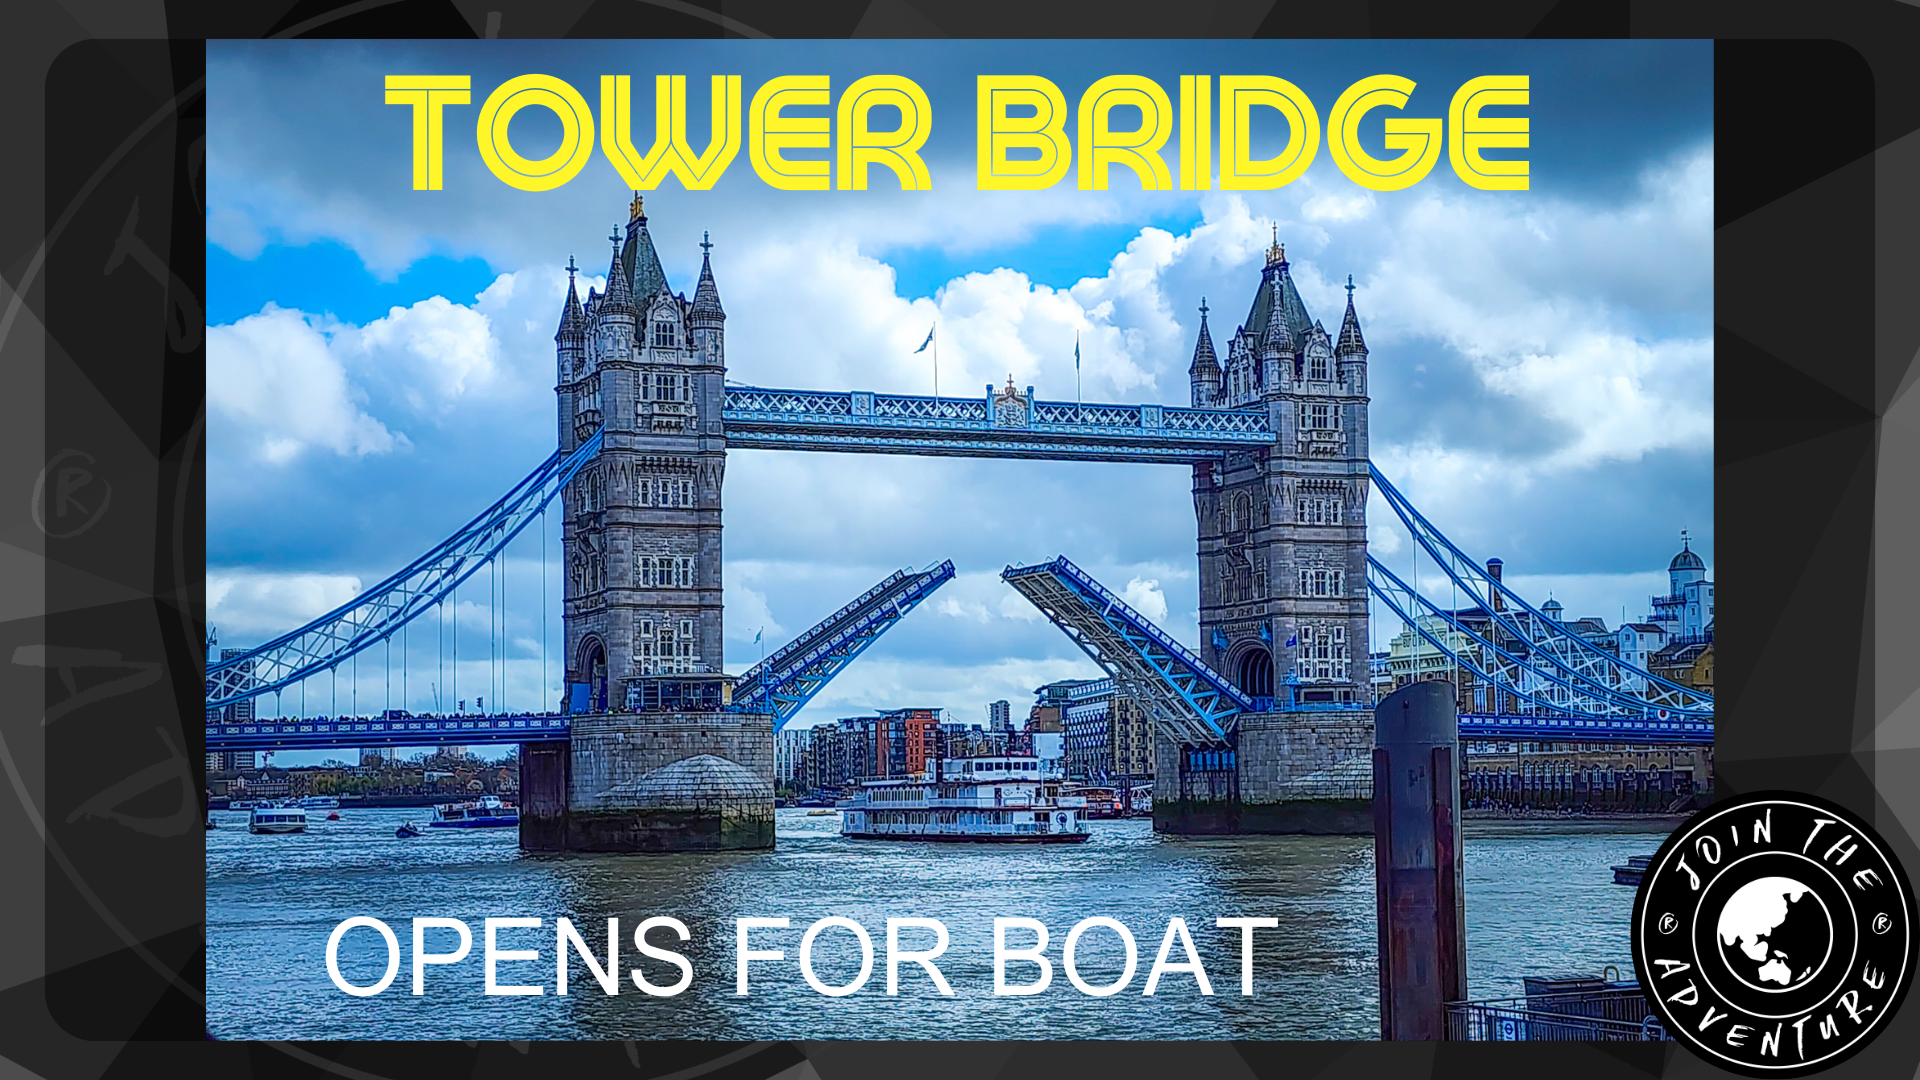 We Got to See Tower Bridge Open!